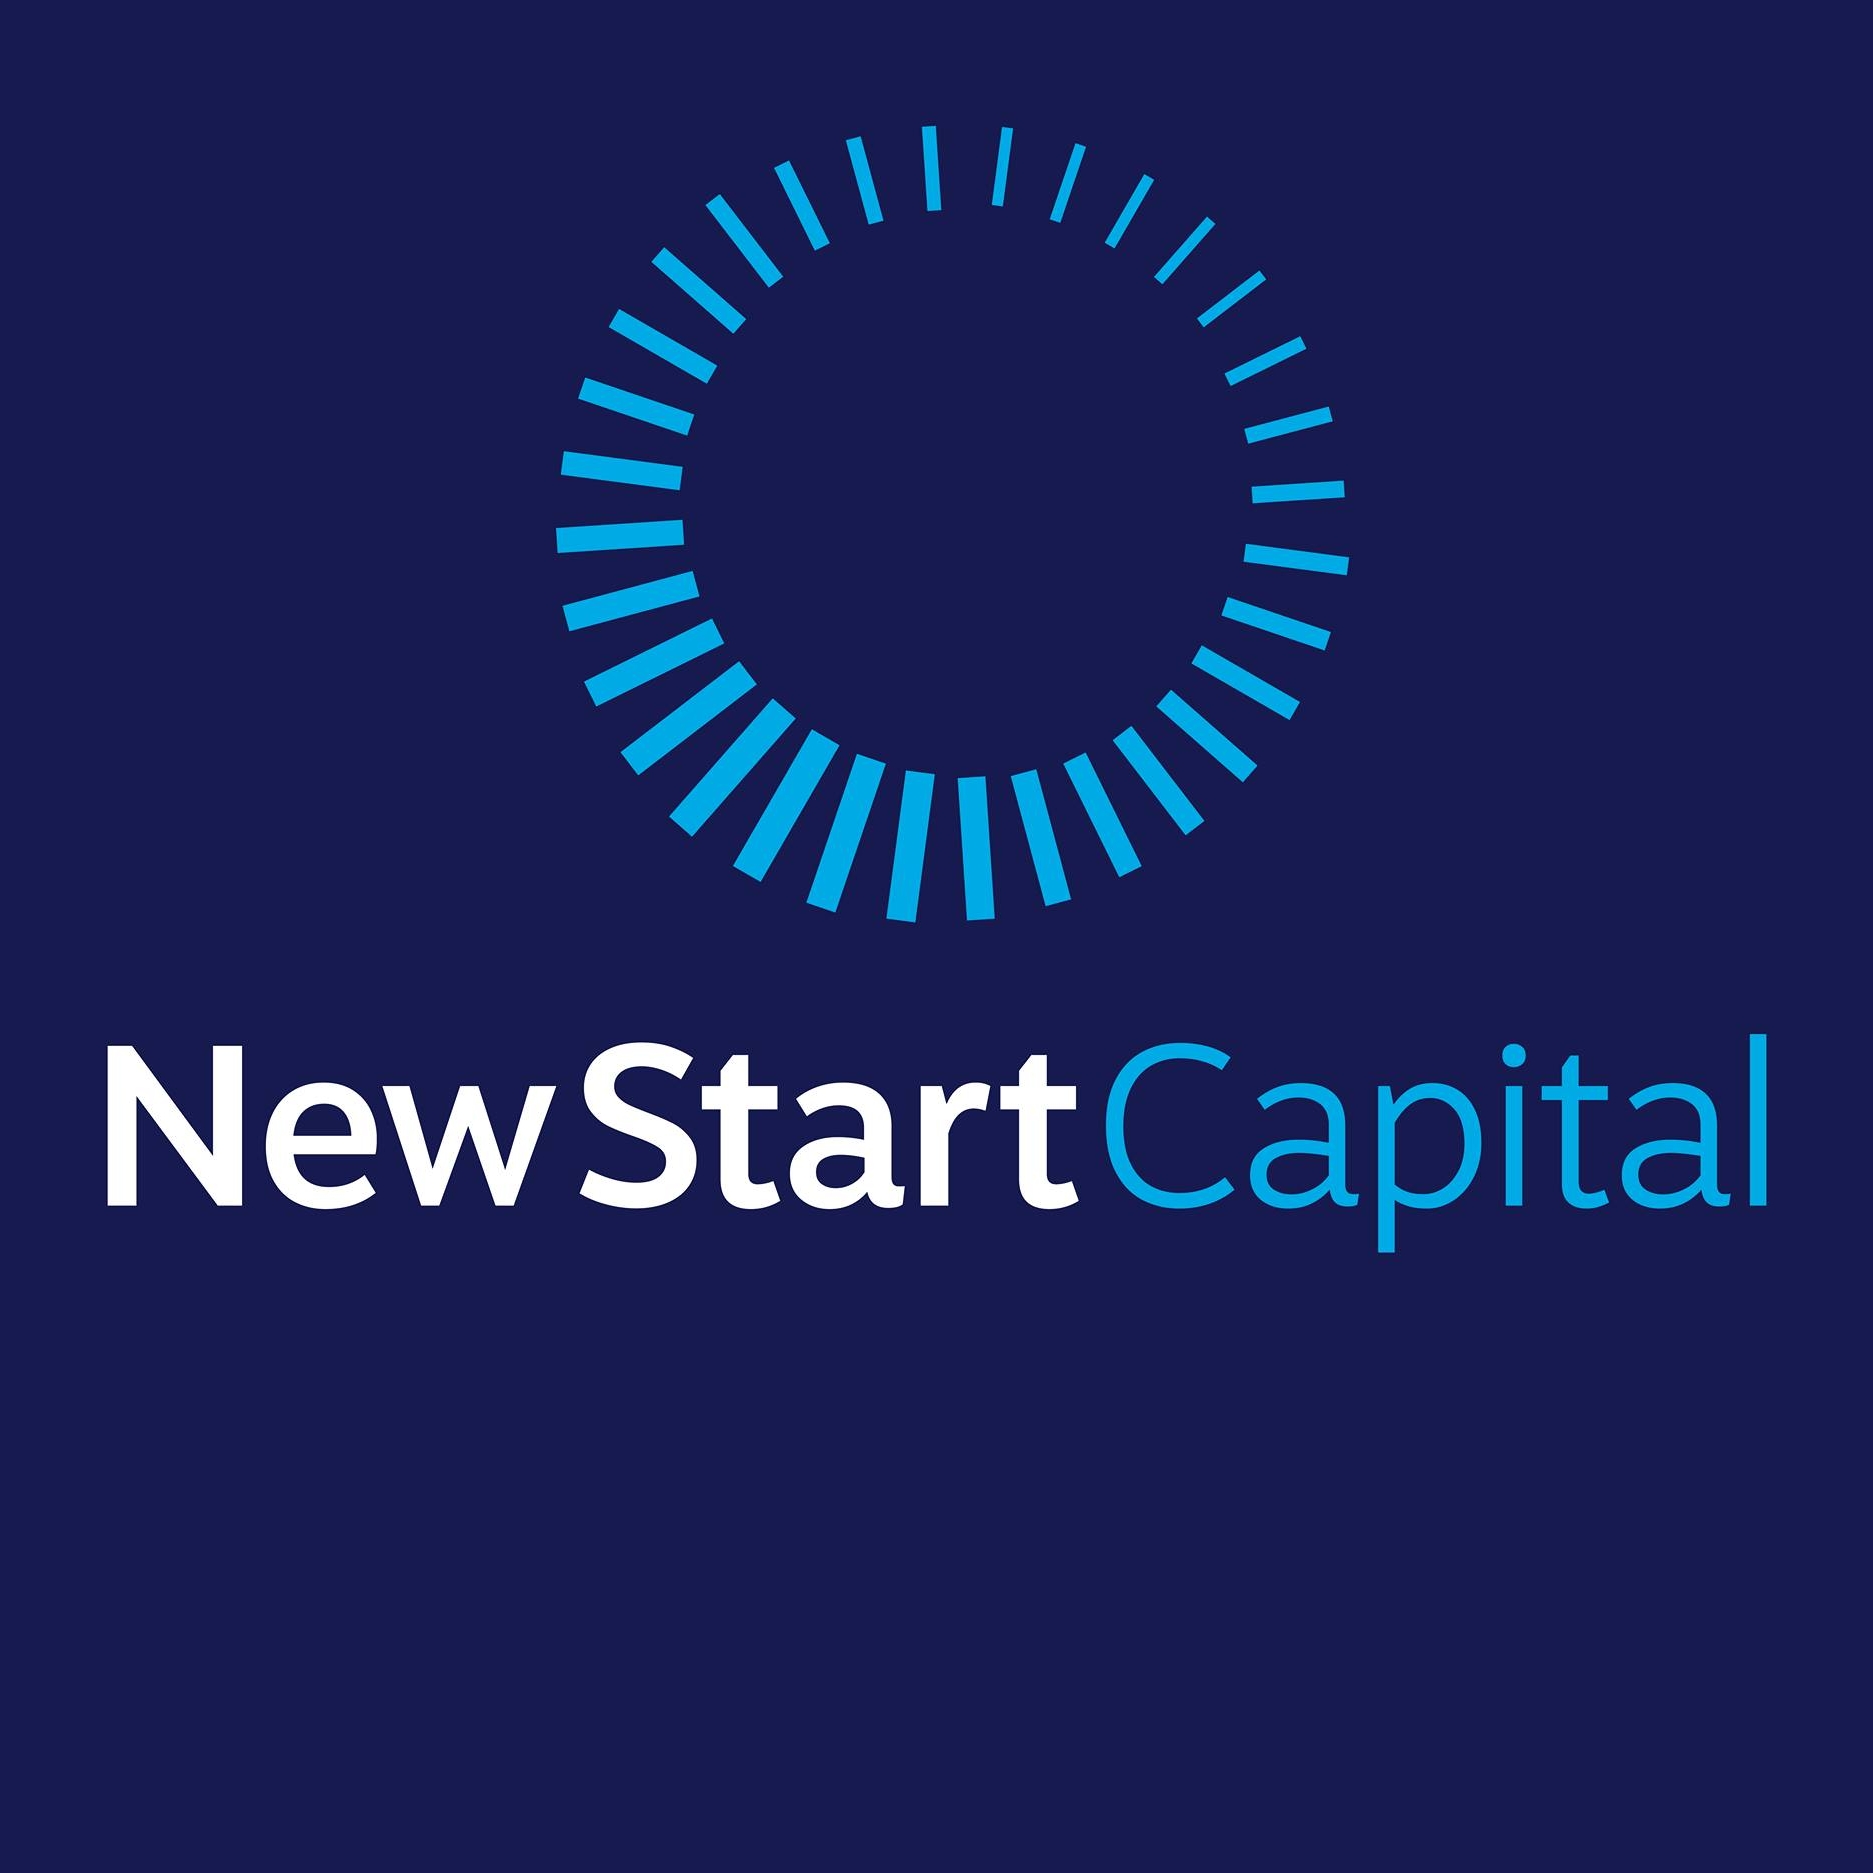 New Start Capital